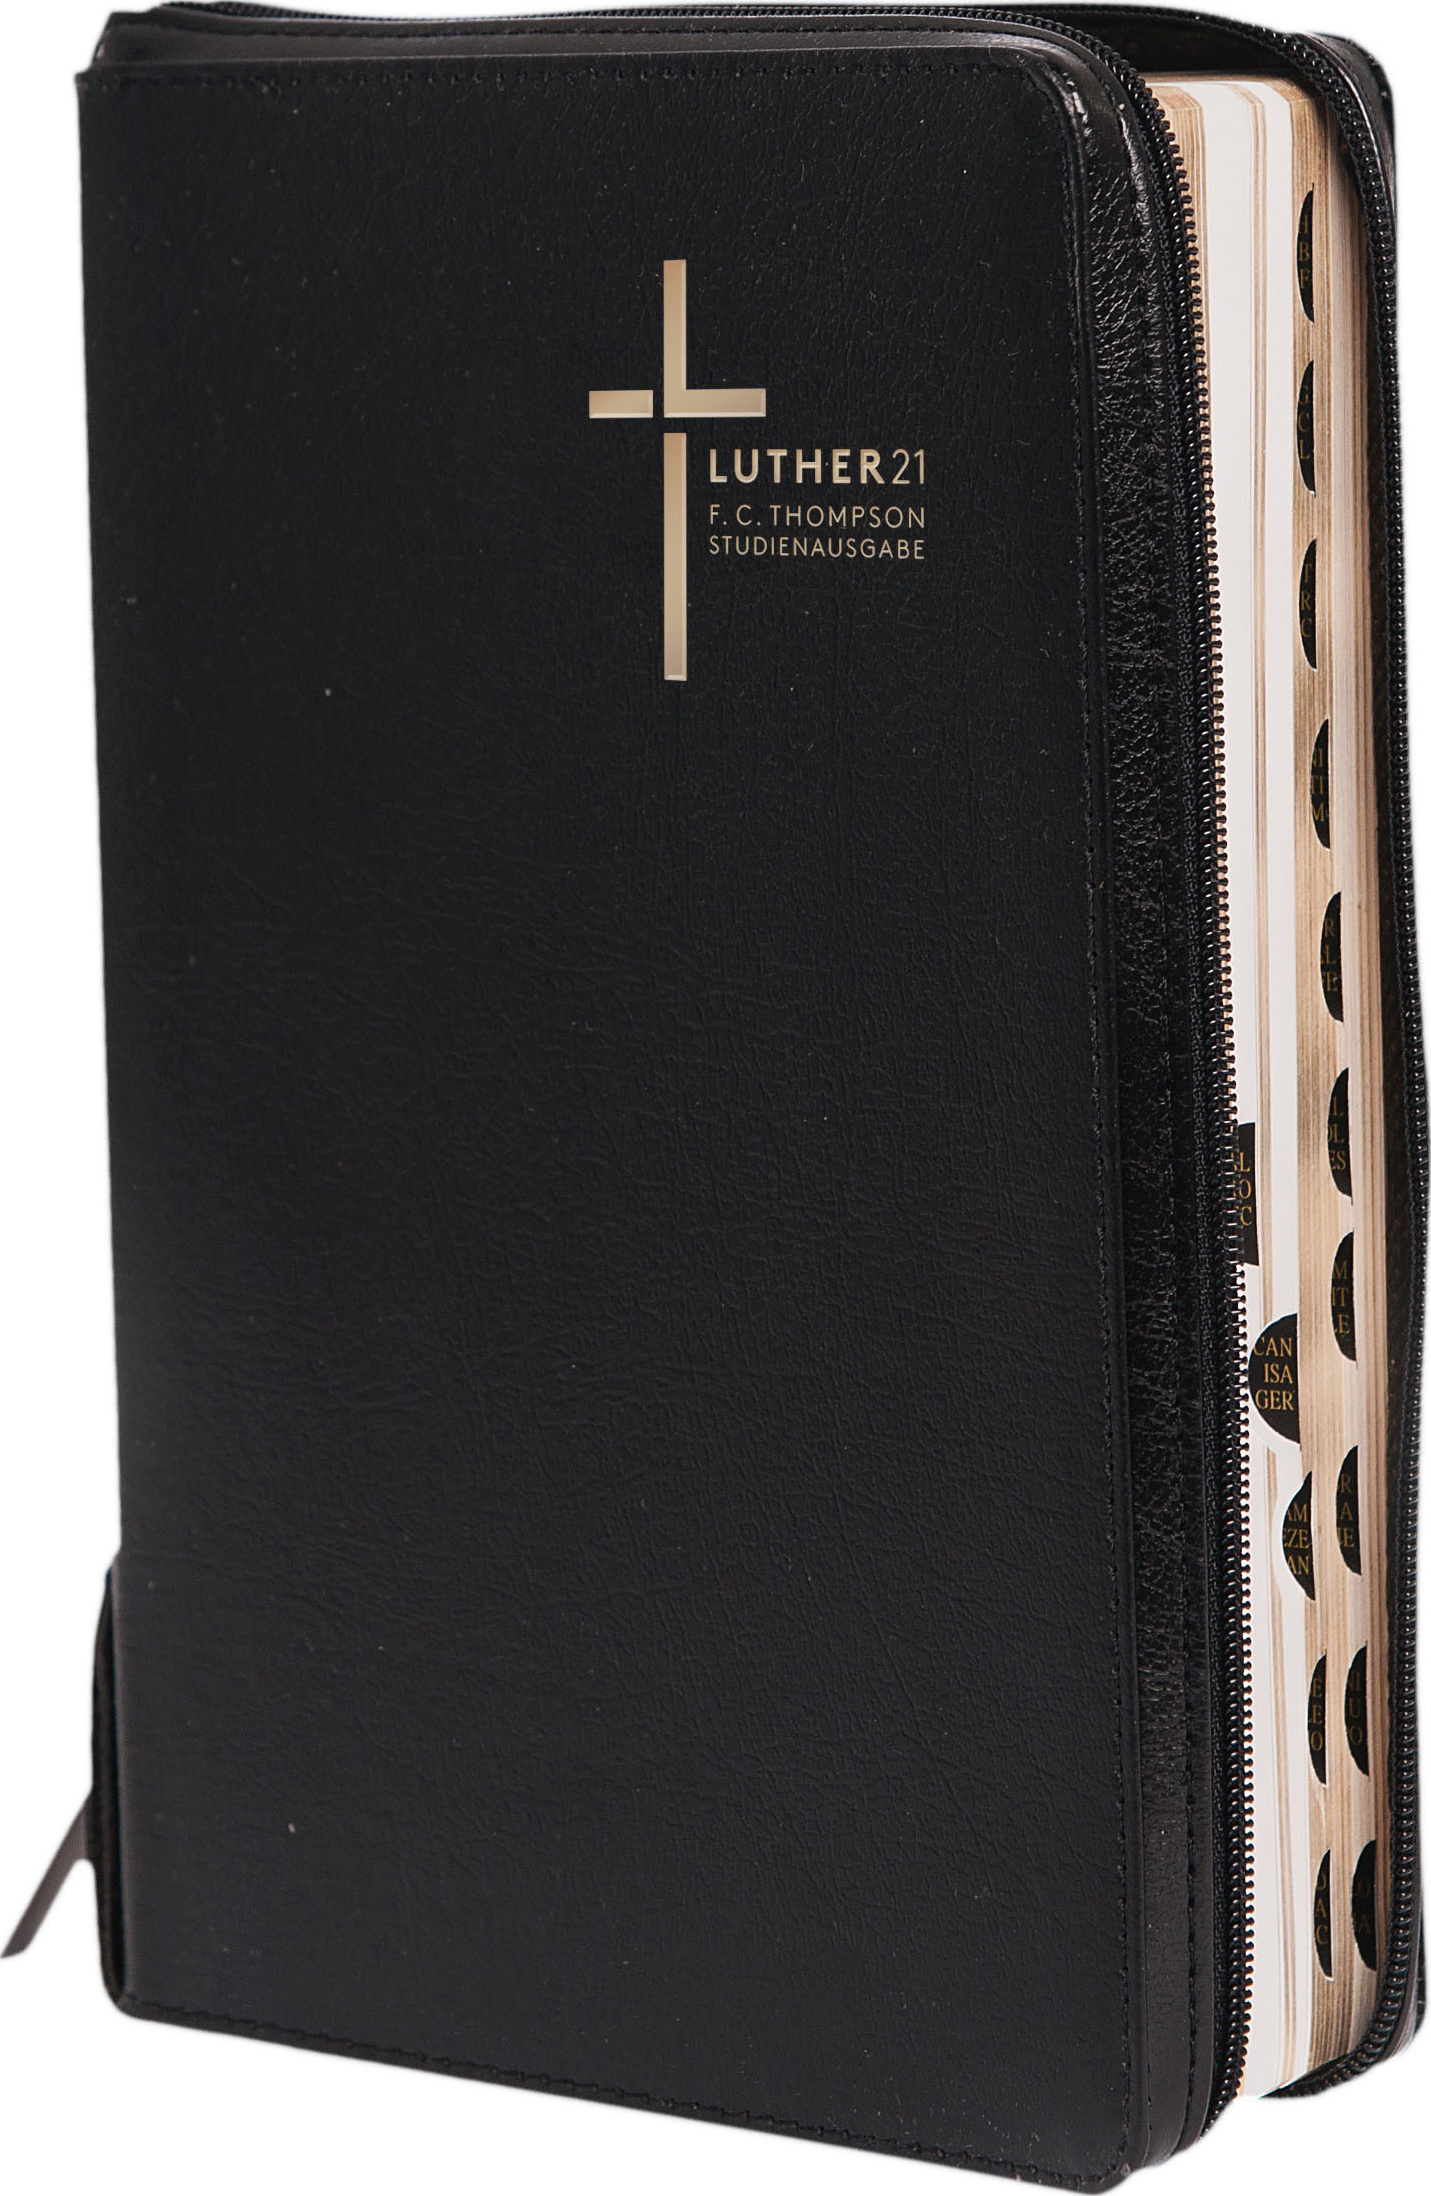 Luther21 - F.C.Thompson Studienbibel, Standard, Cromwell Leder, schwaz - Godschn. mit Register RV